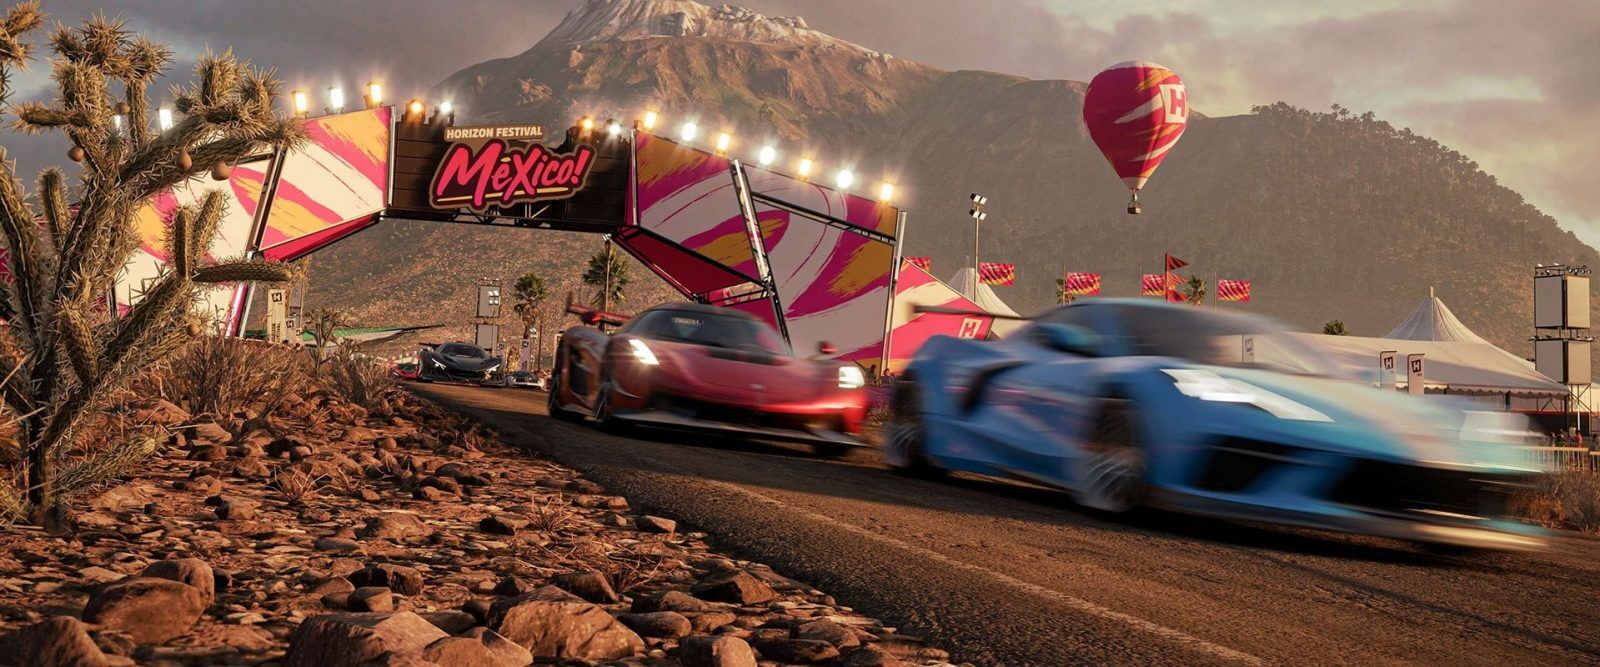 Full map for Forza Horizon 5 revealed